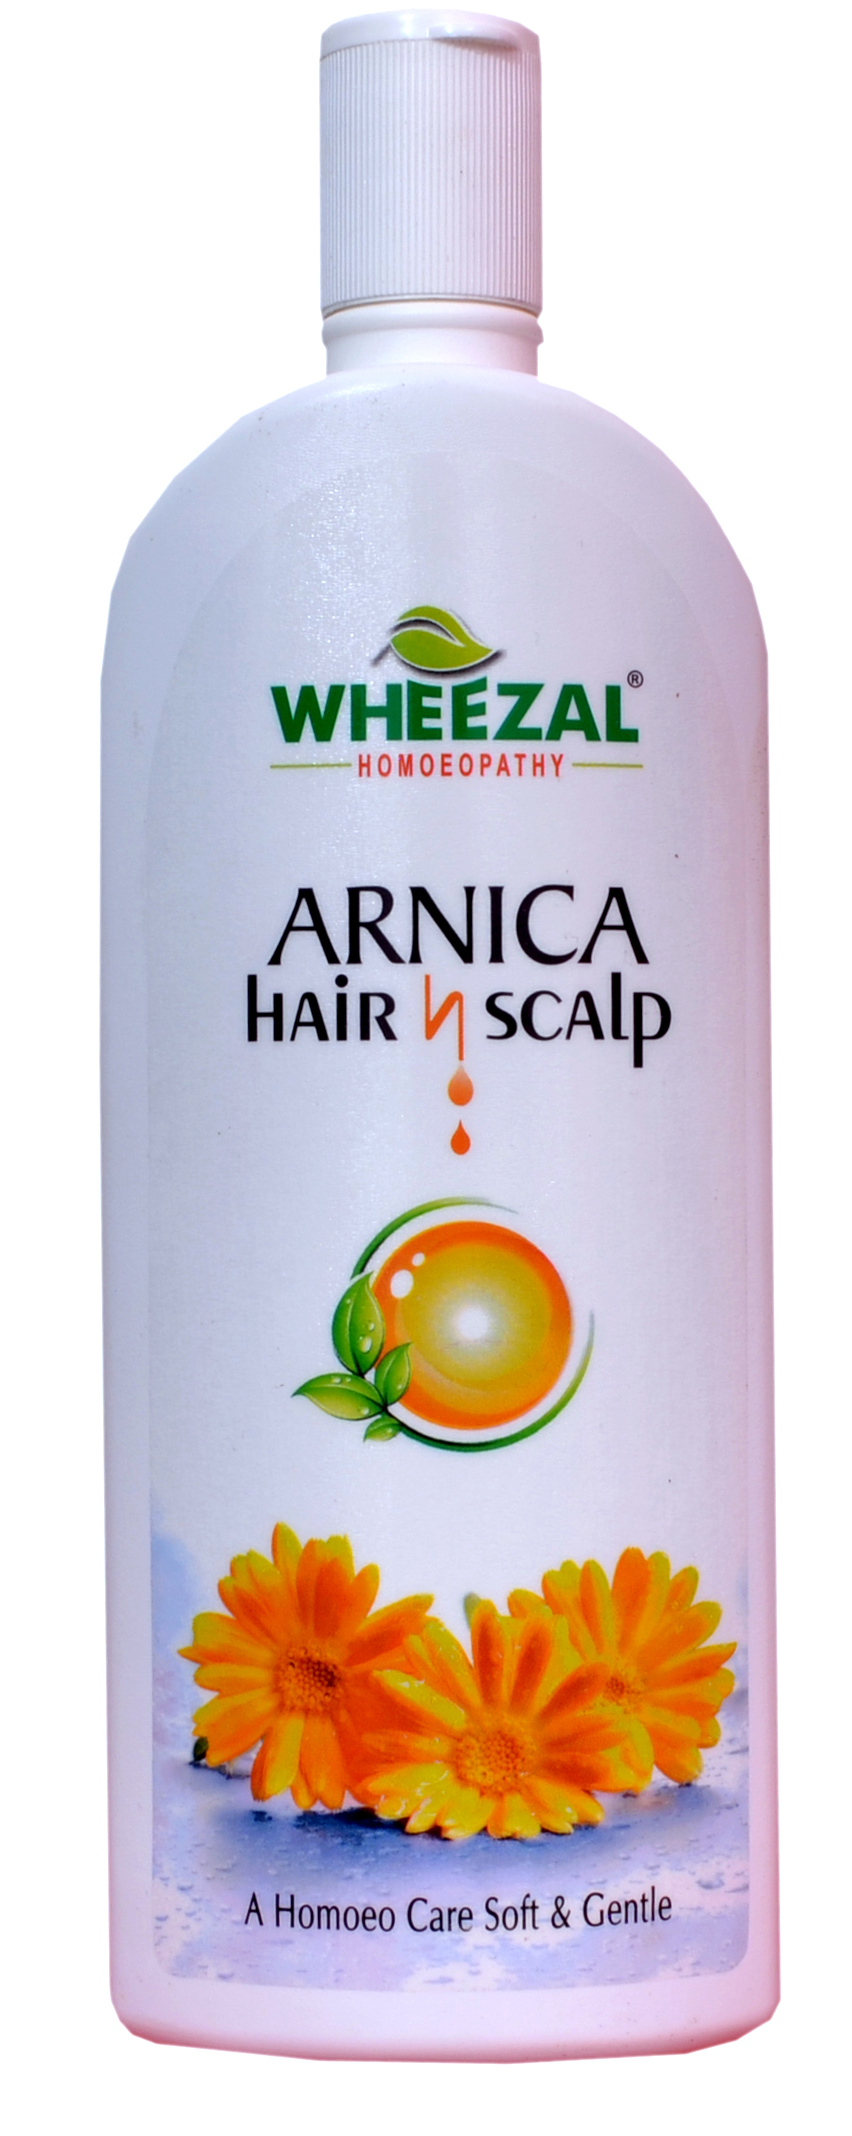 SBL ARNICA MONTANA HAIR OIL 200 ML Hair Oil - Price in India, Buy SBL  ARNICA MONTANA HAIR OIL 200 ML Hair Oil Online In India, Reviews, Ratings &  Features | Flipkart.com